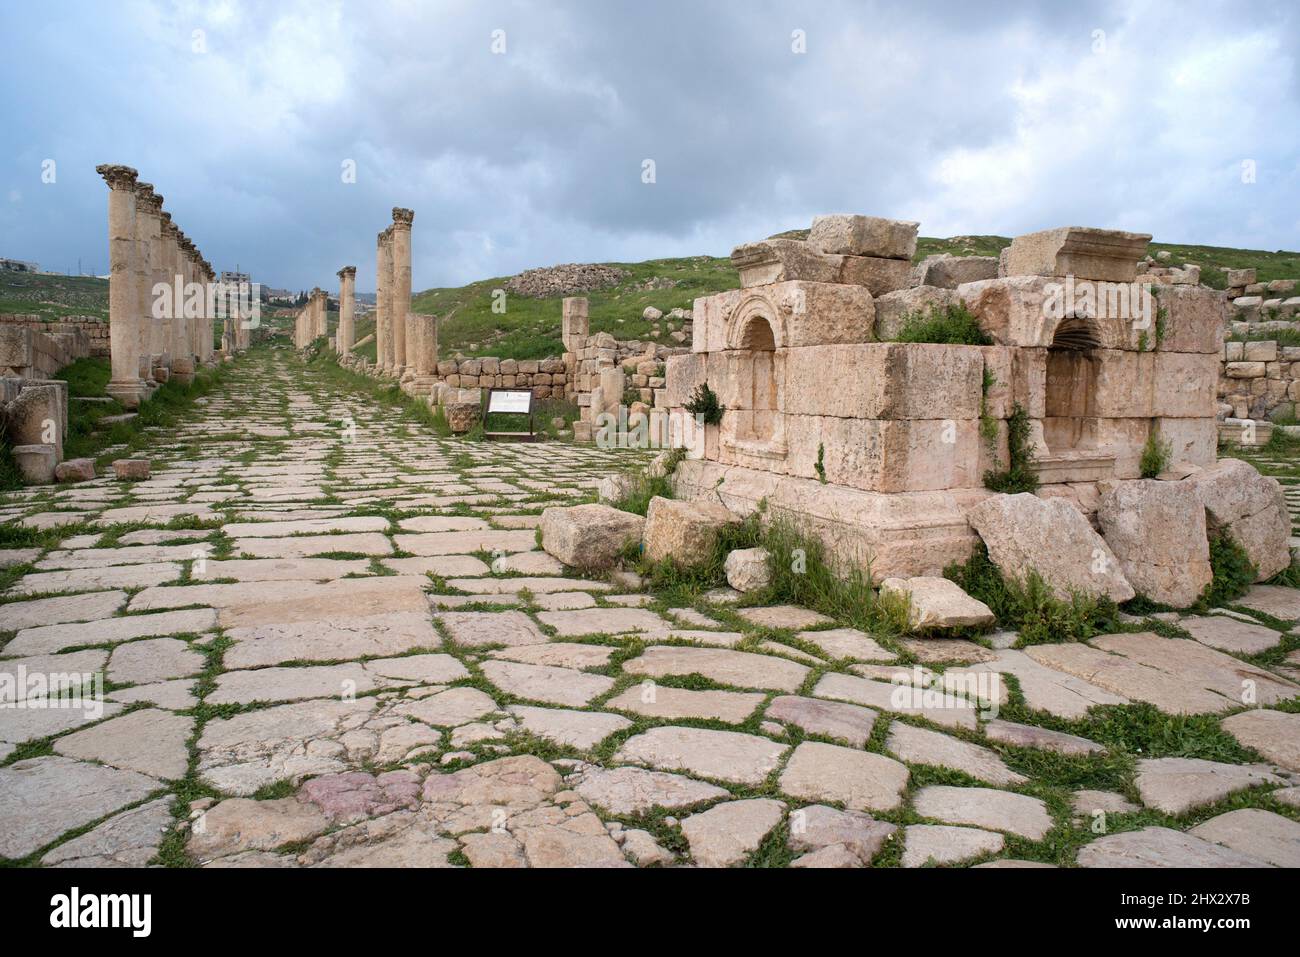 Jerash, Cardo Maximus (colonnade street). Jordan. Stock Photo